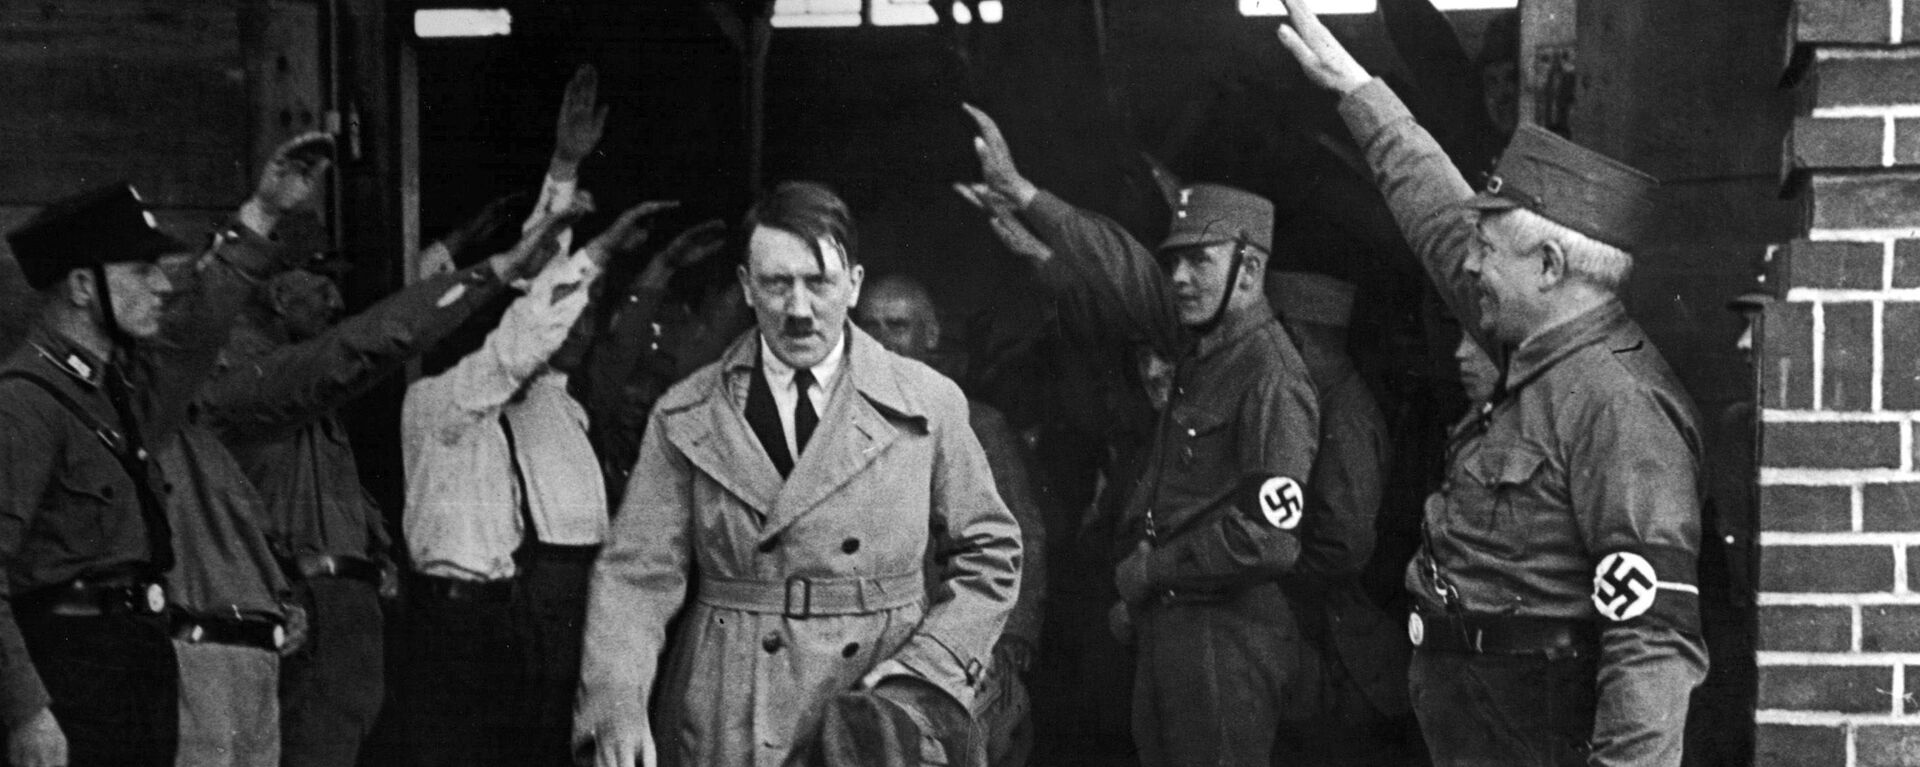 Adolf Hitler, líder de la Alemania nazi (archivo) - Sputnik Mundo, 1920, 17.12.2020